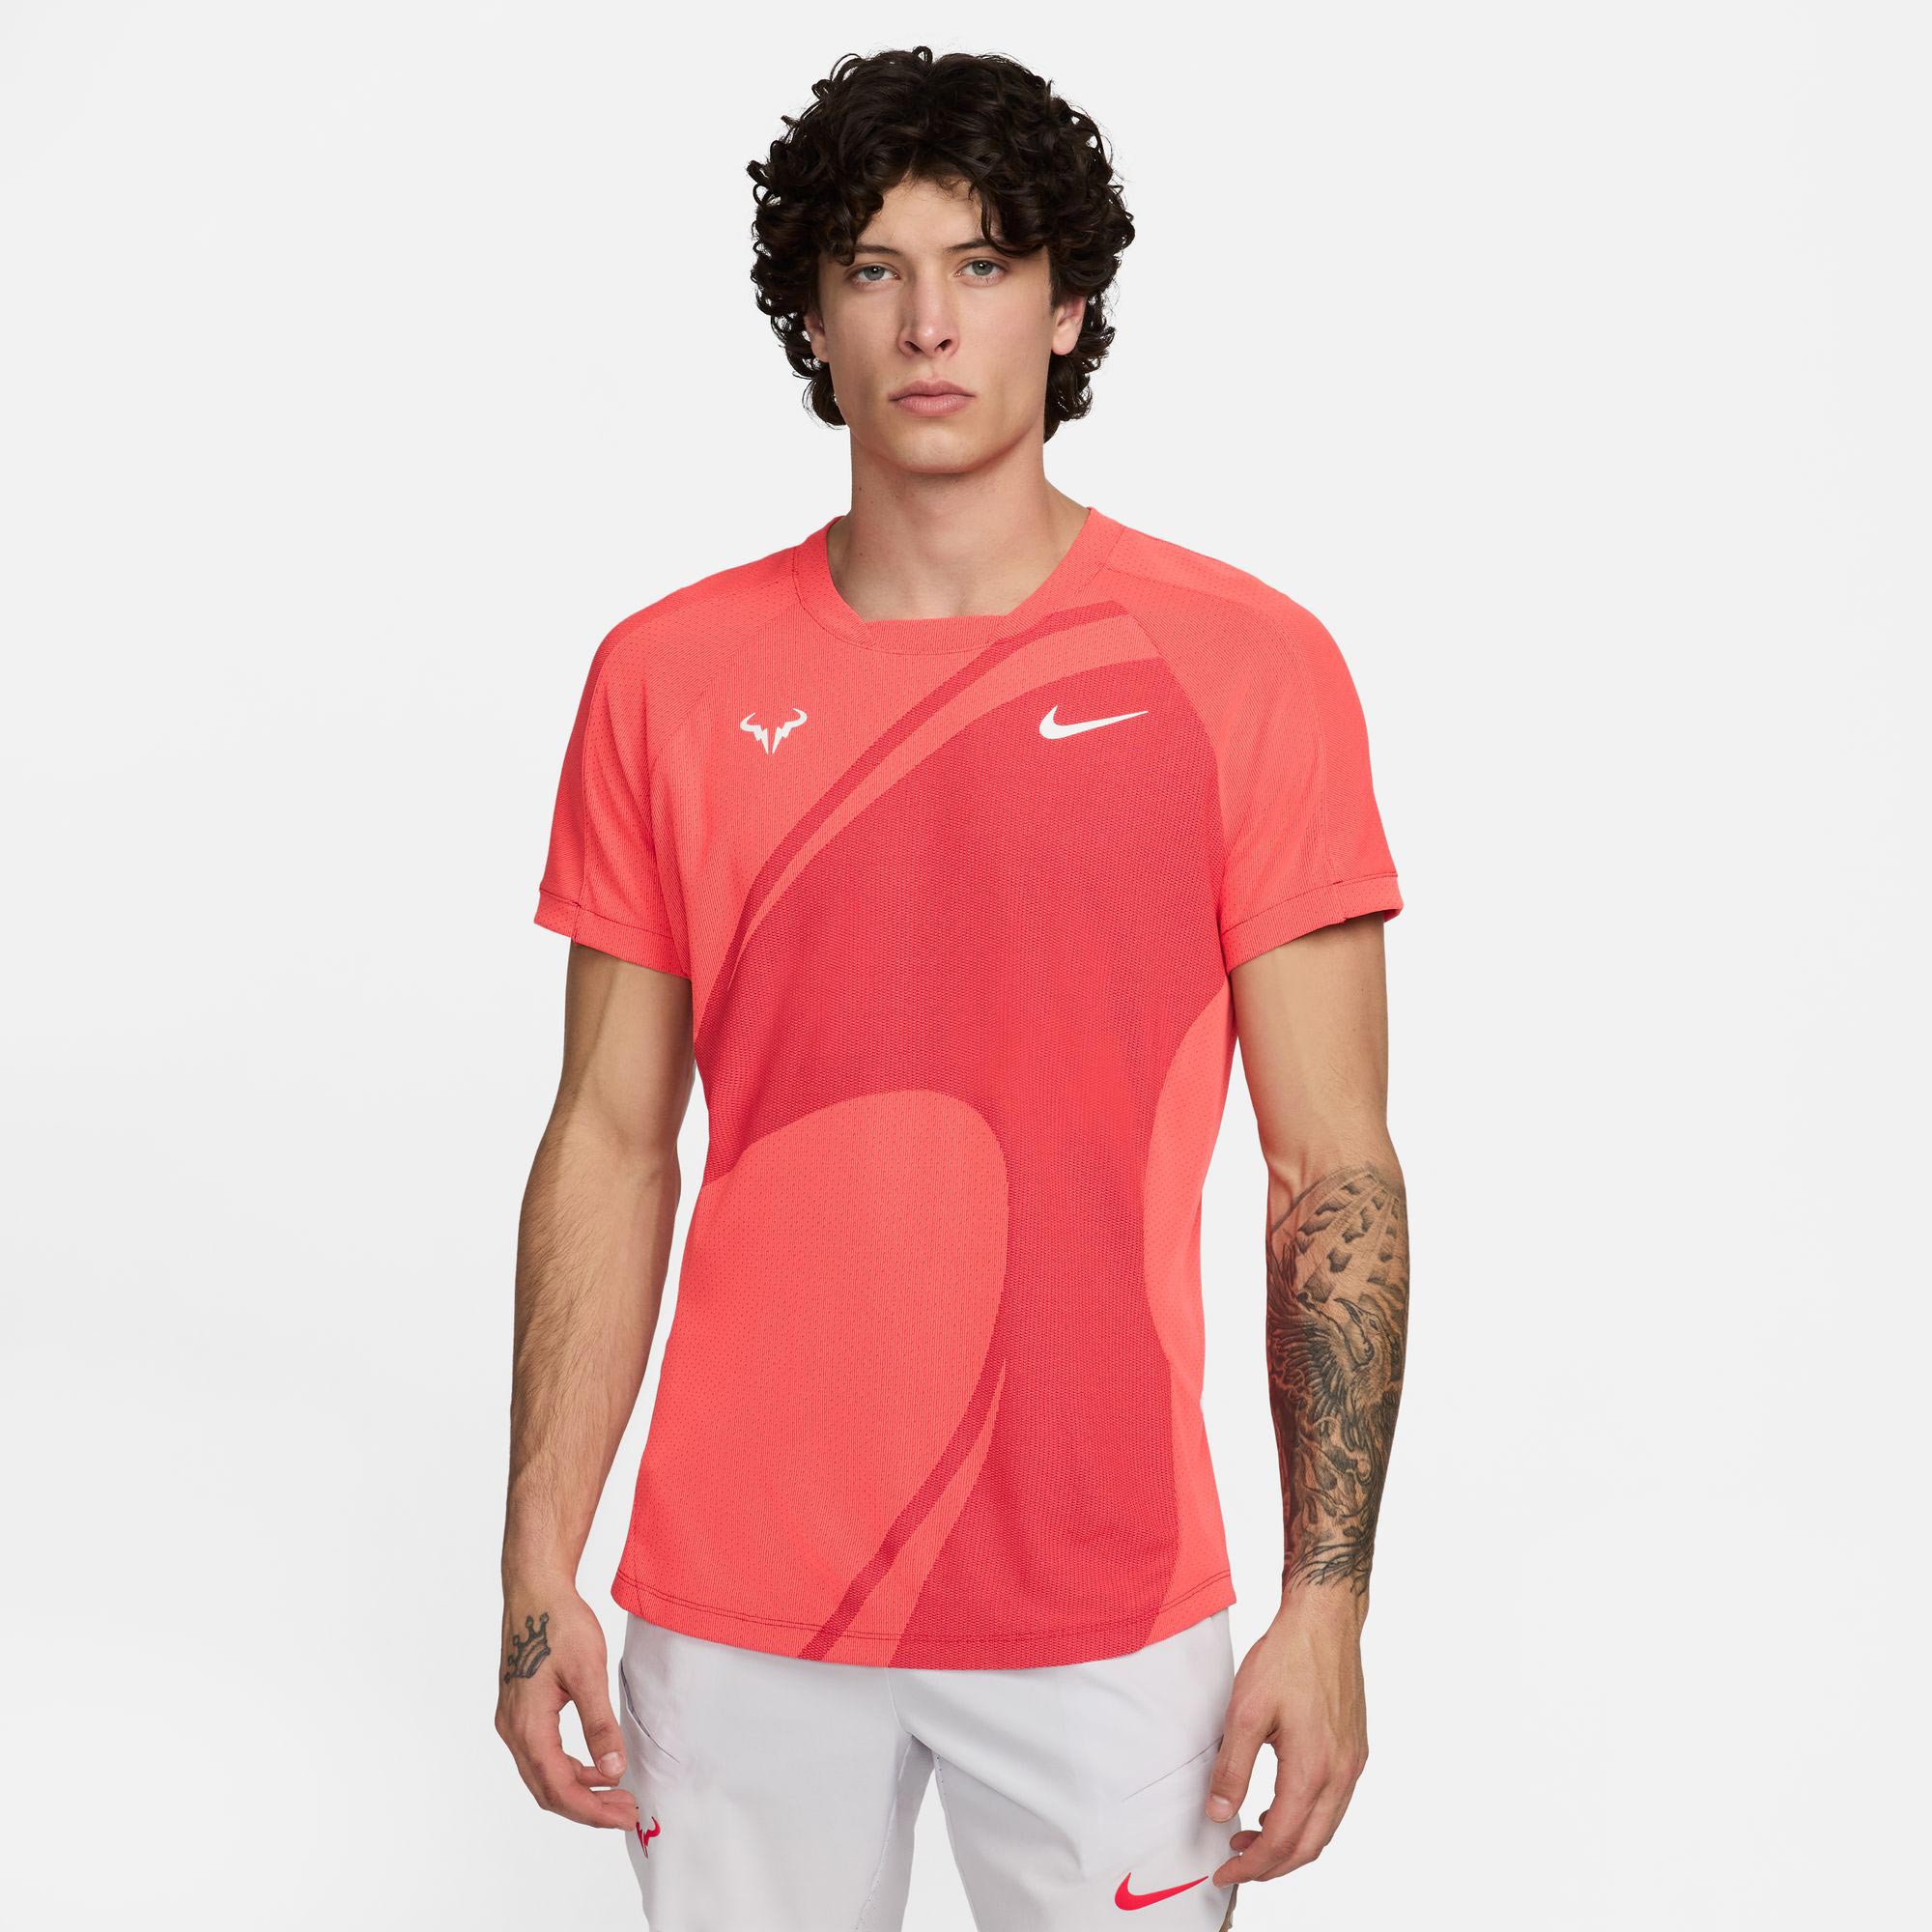 Nike Rafa Men's Dri-FIT ADV Tennis Shirt - Red (1)